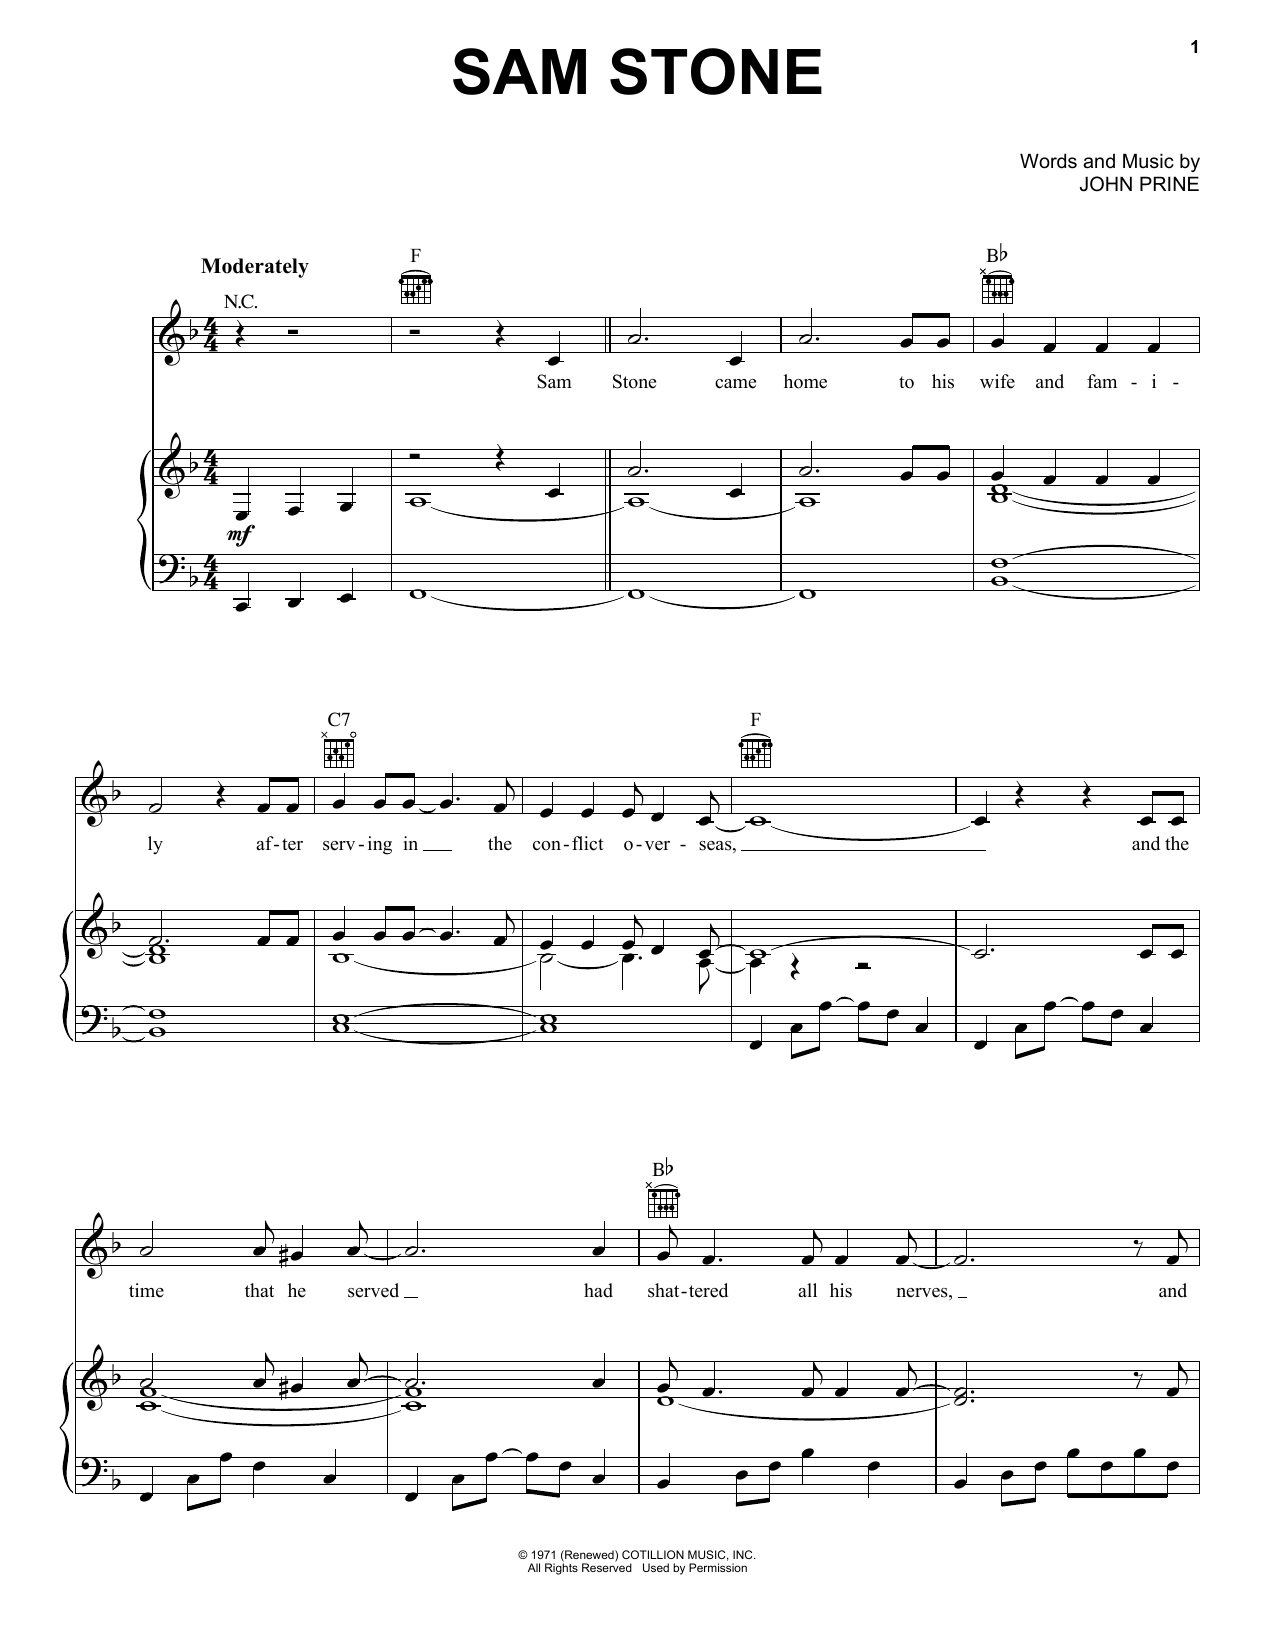 John Prine Sam Stone Sheet Music Notes & Chords for Guitar Tab Play-Along - Download or Print PDF